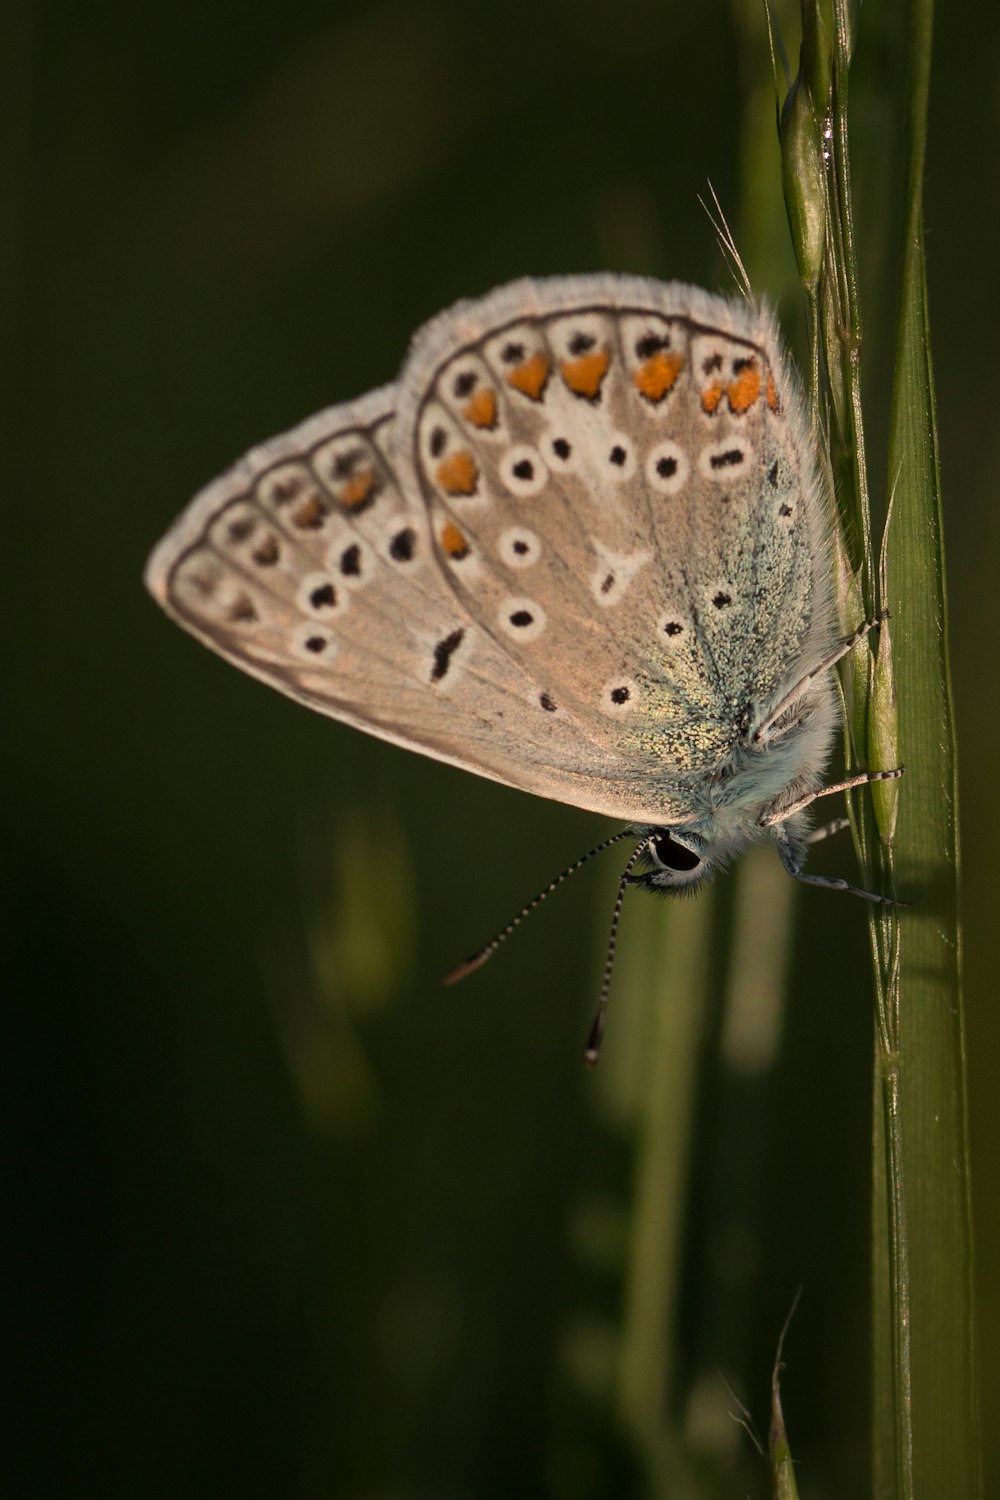 borboleta marrom e branca na planta verde